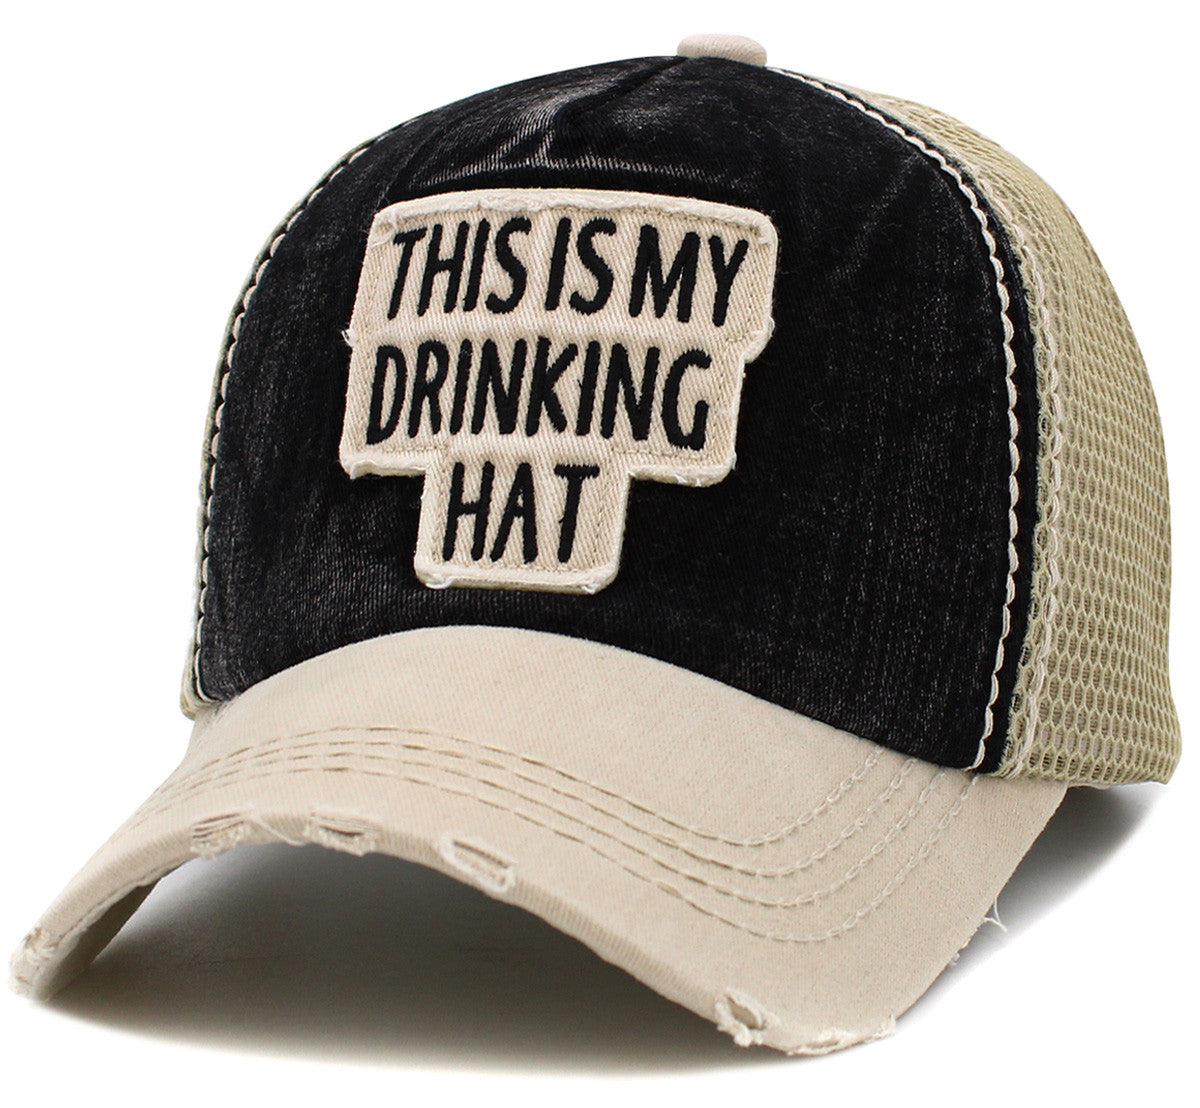 This Is My Drinking Hat Vintage Mesh Back - iNeedaHat.com